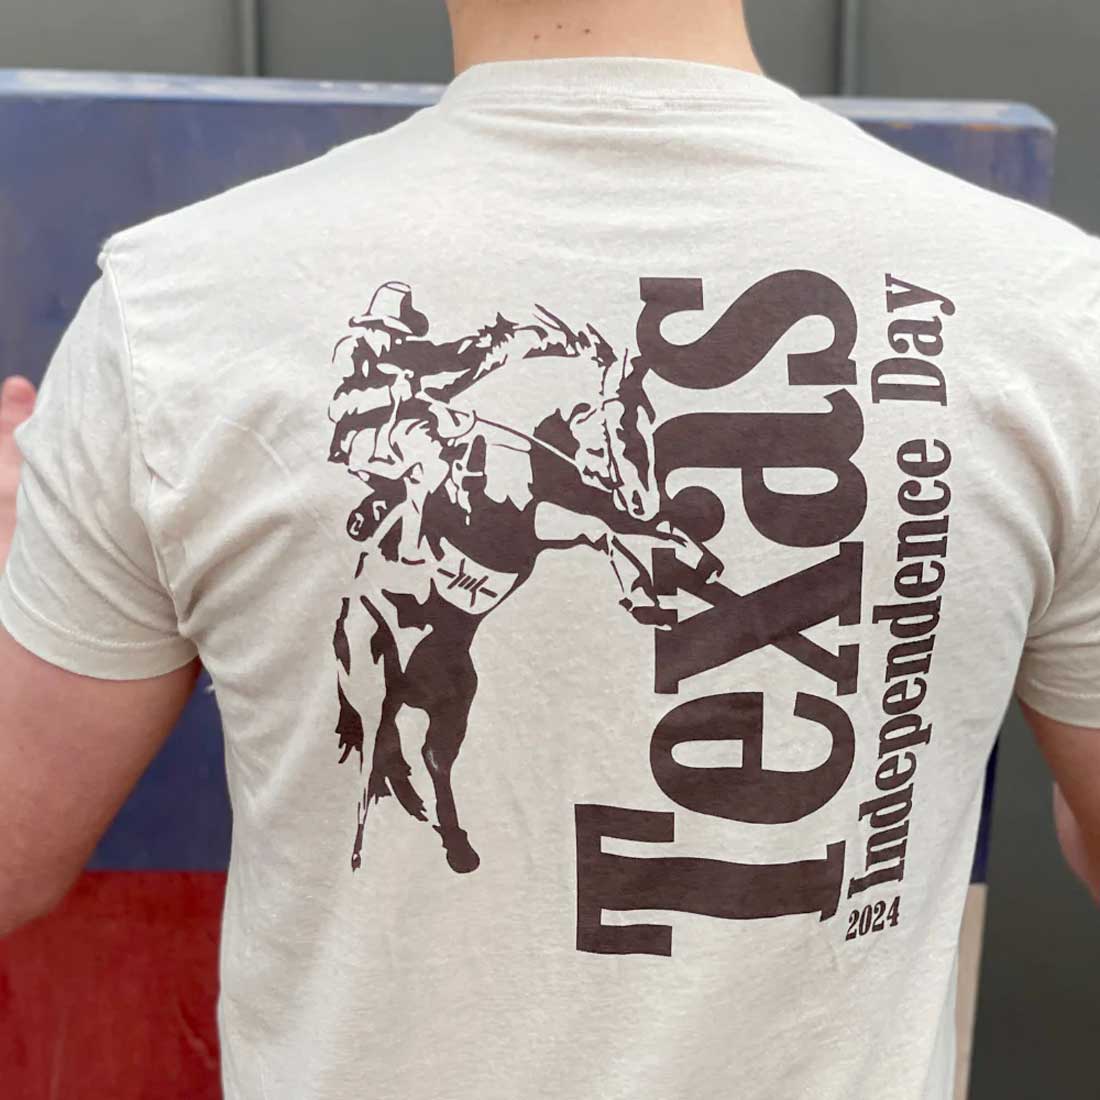 Texas Standard Texas Independence Day Tee - Men's